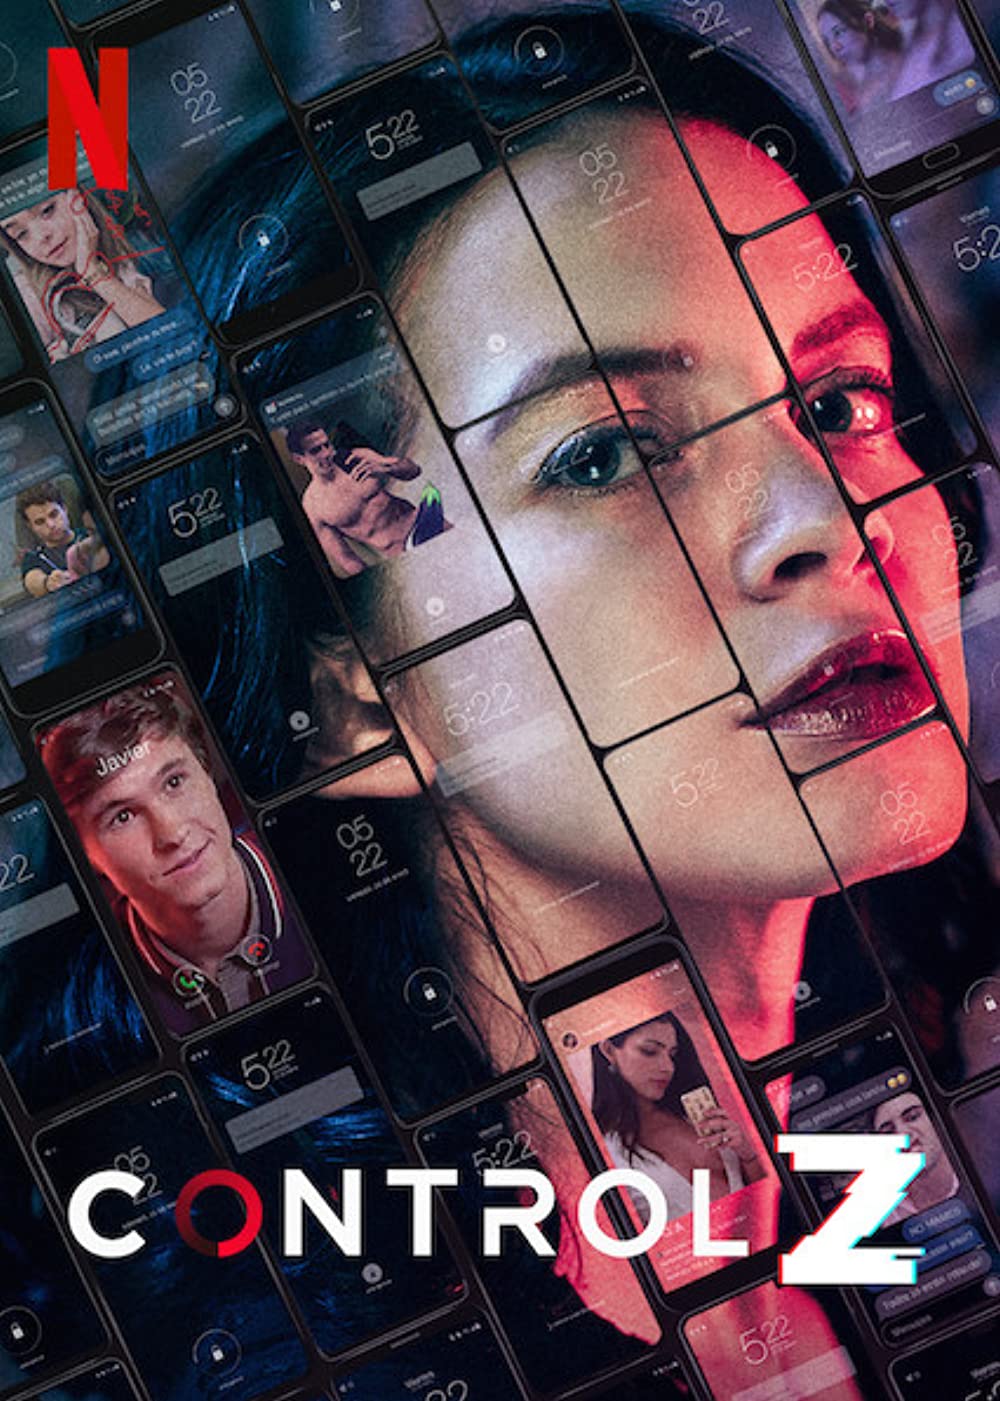 Sinopsis Control Z 2, kelanjutan drama detektif sekolah yang misterius